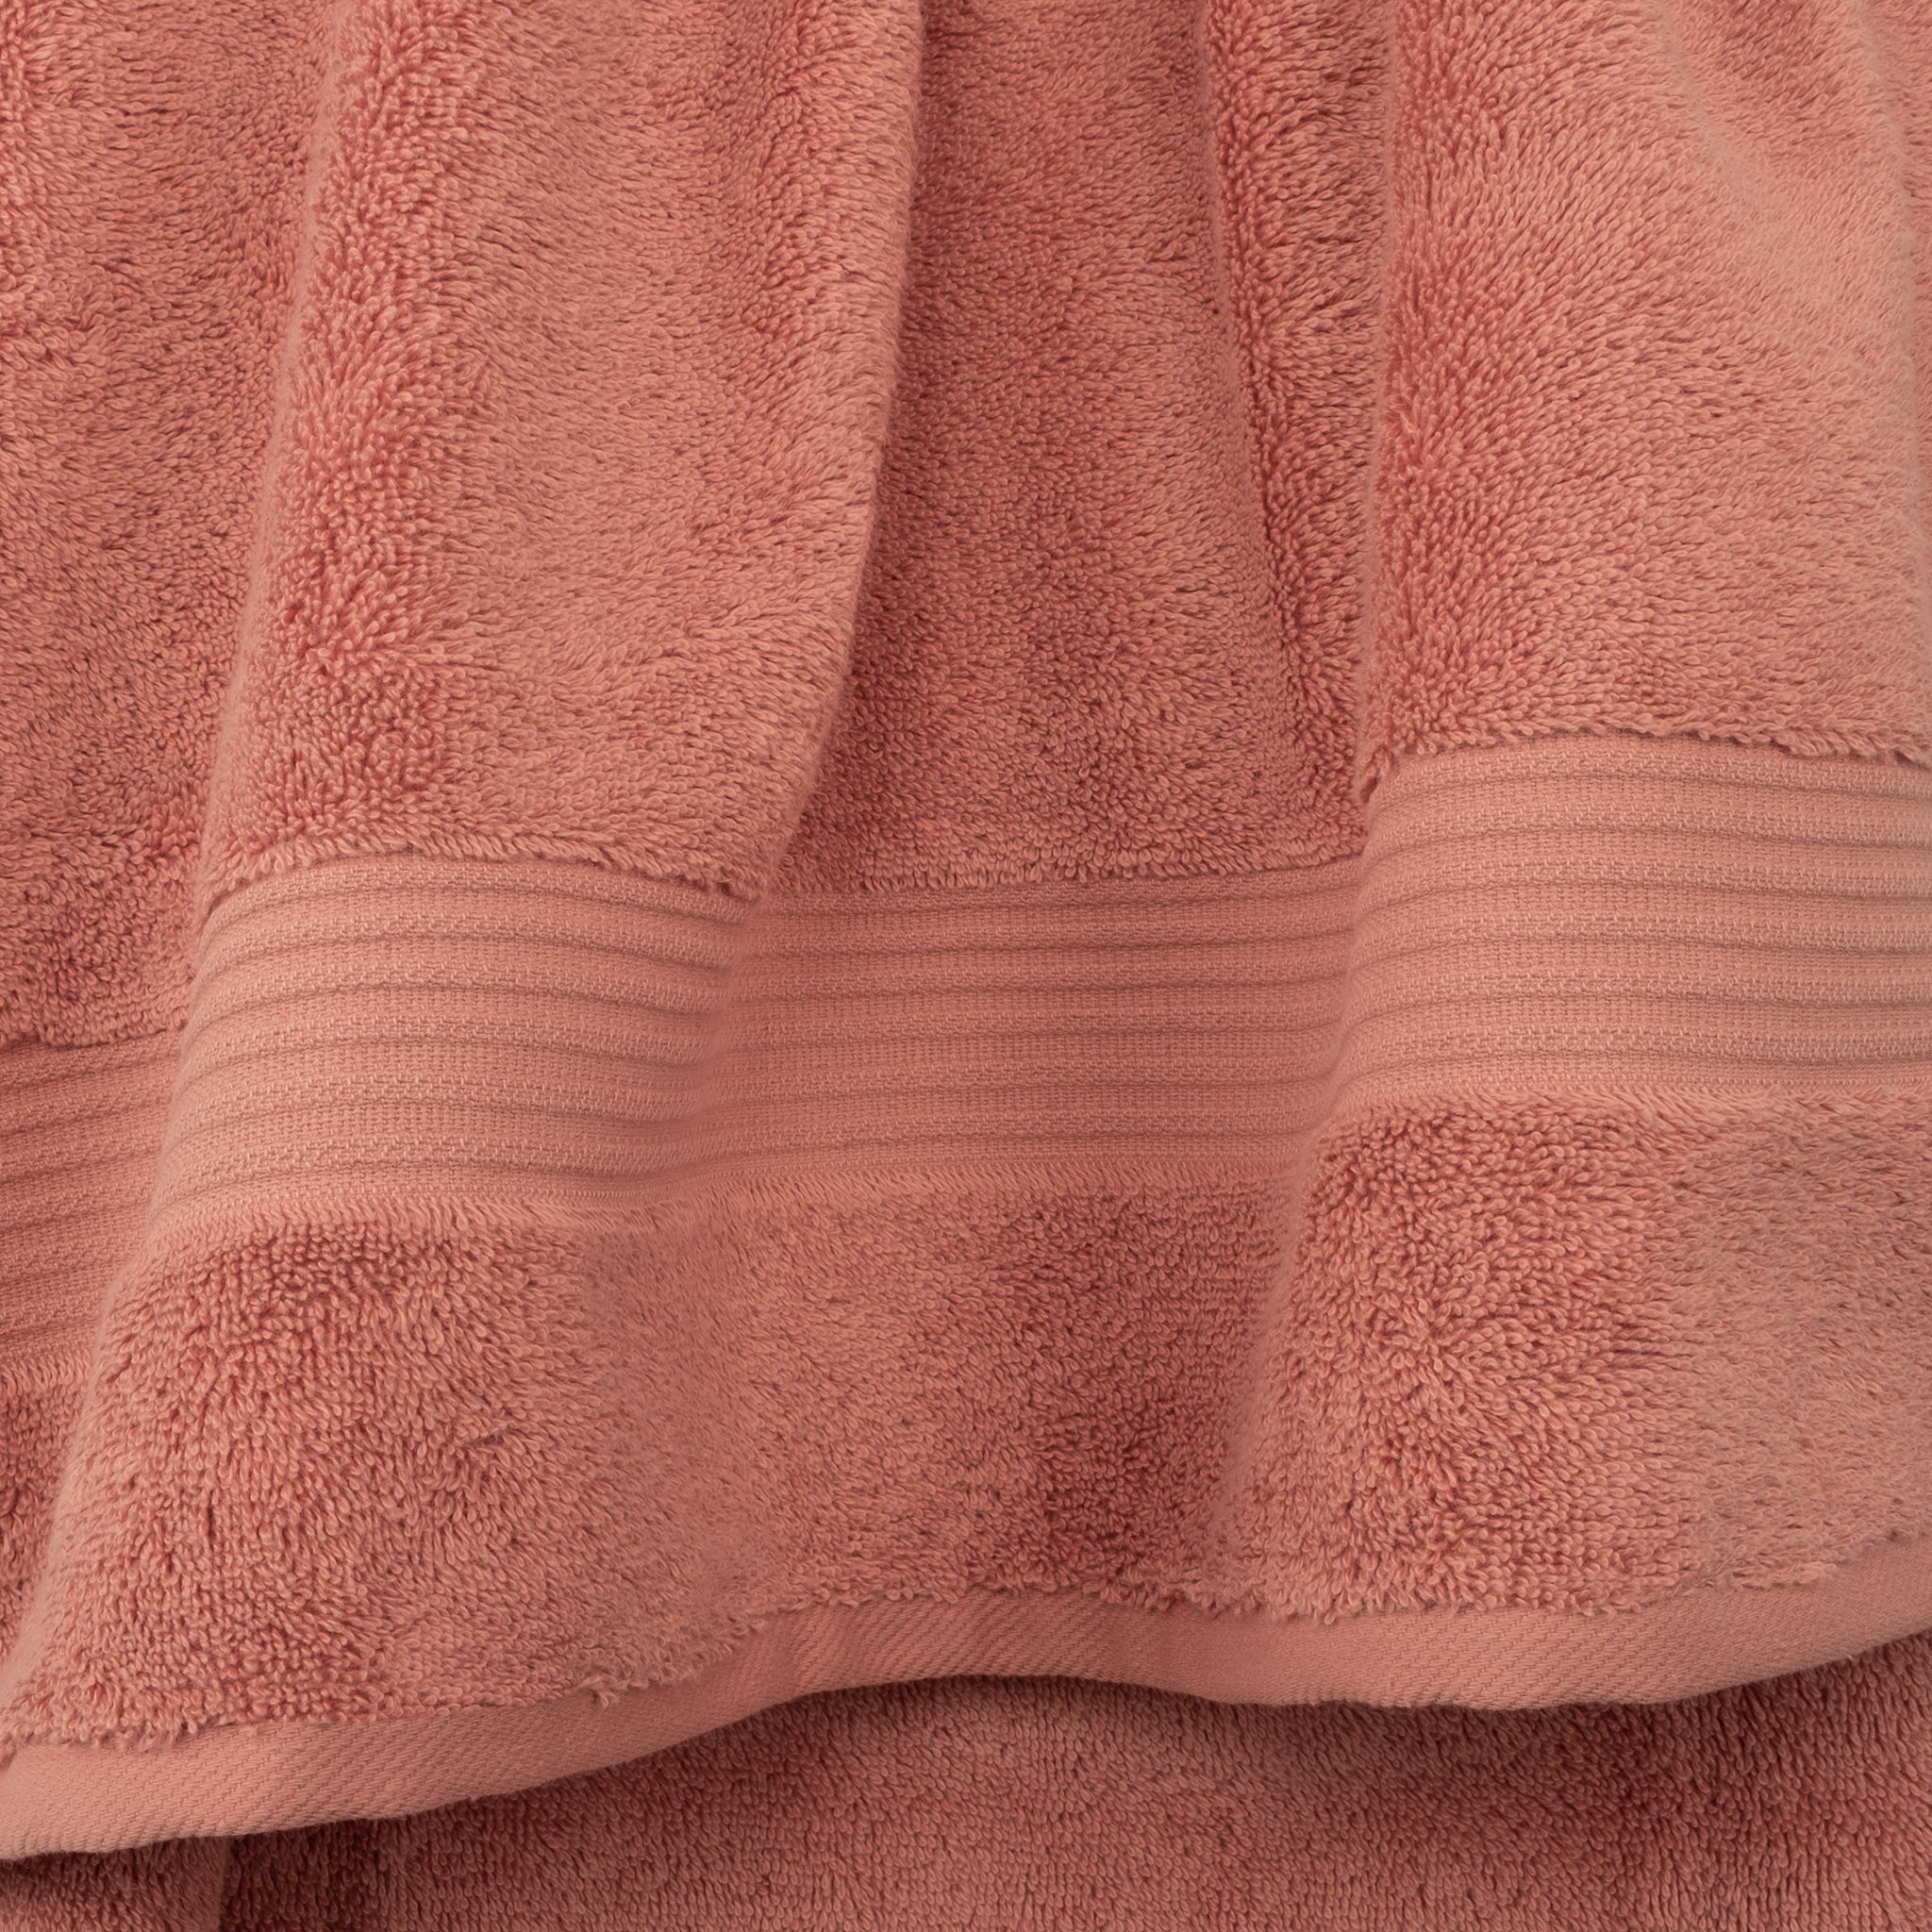 American Soft Linen Bekos 100% Cotton Turkish Towels, 4 Piece Hand Towel Set -coral-03